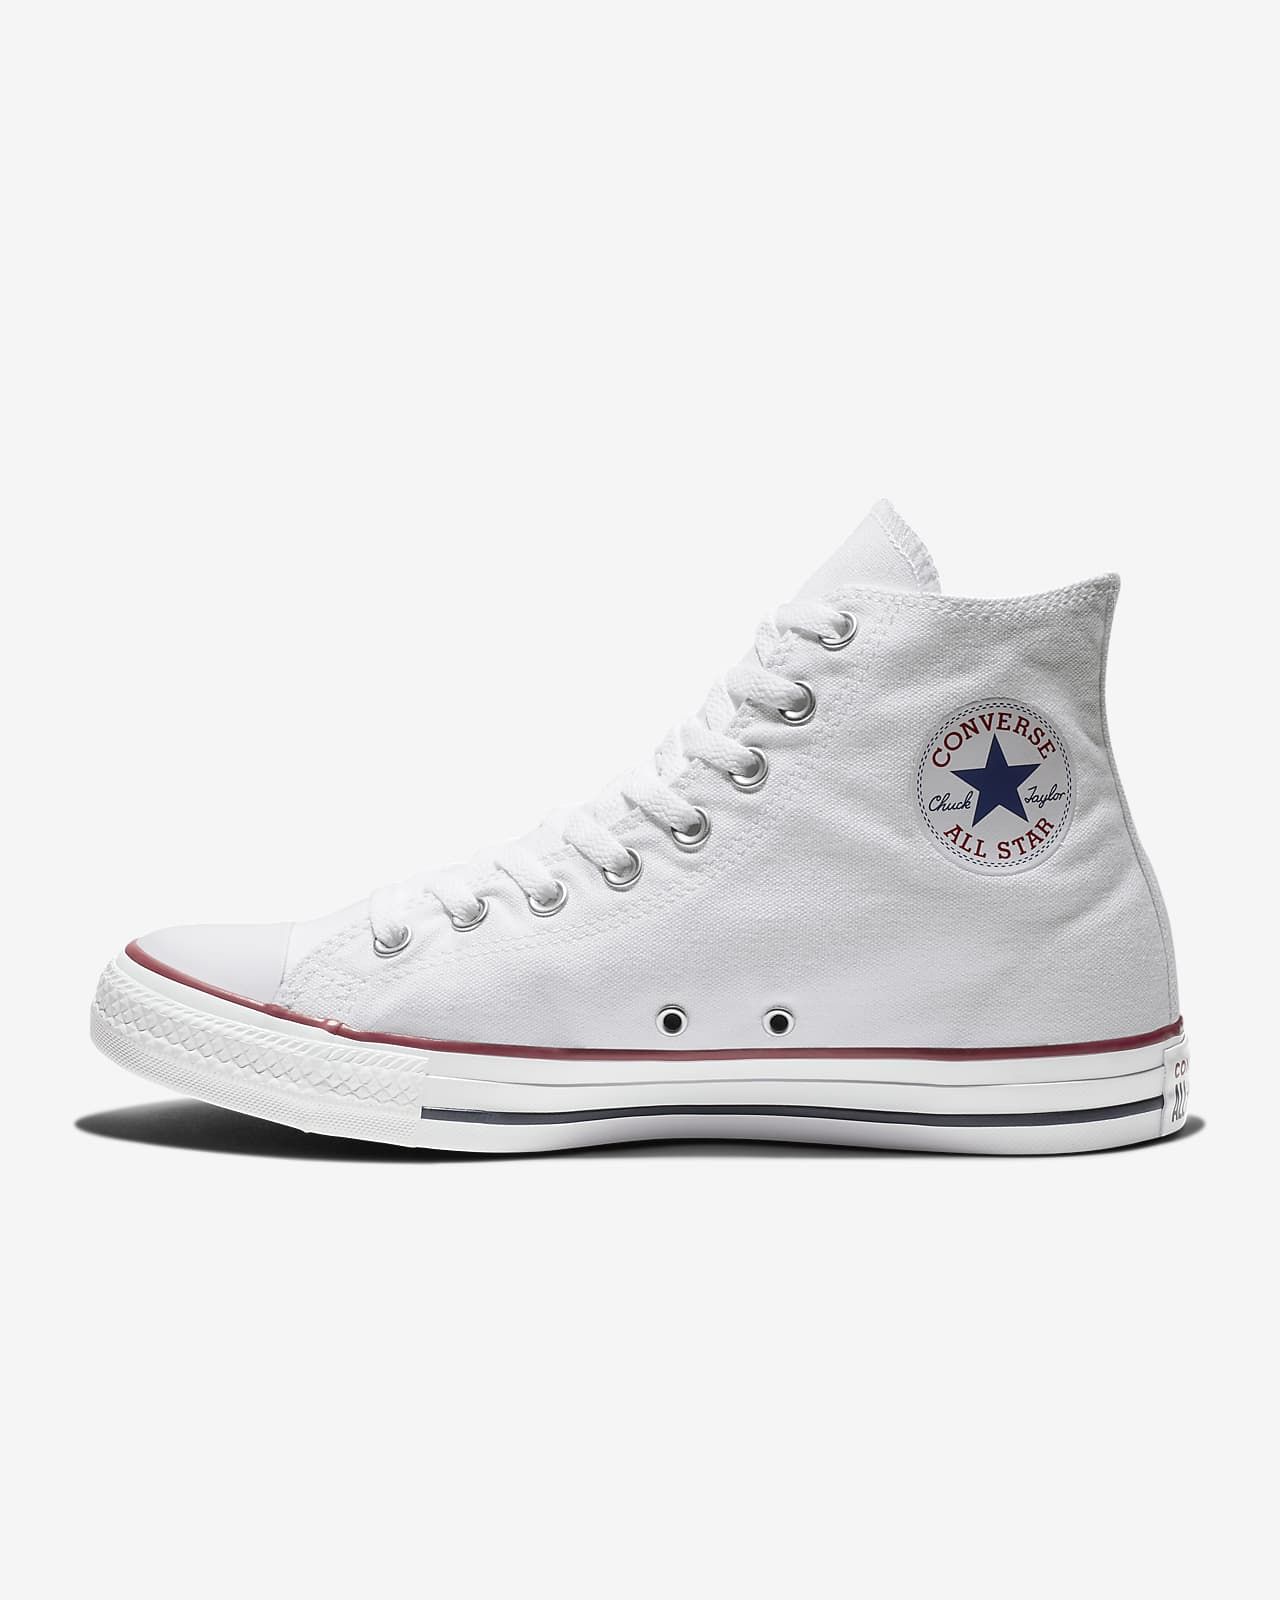 Converse Chuck Taylor All Star High Top | Nike (US)